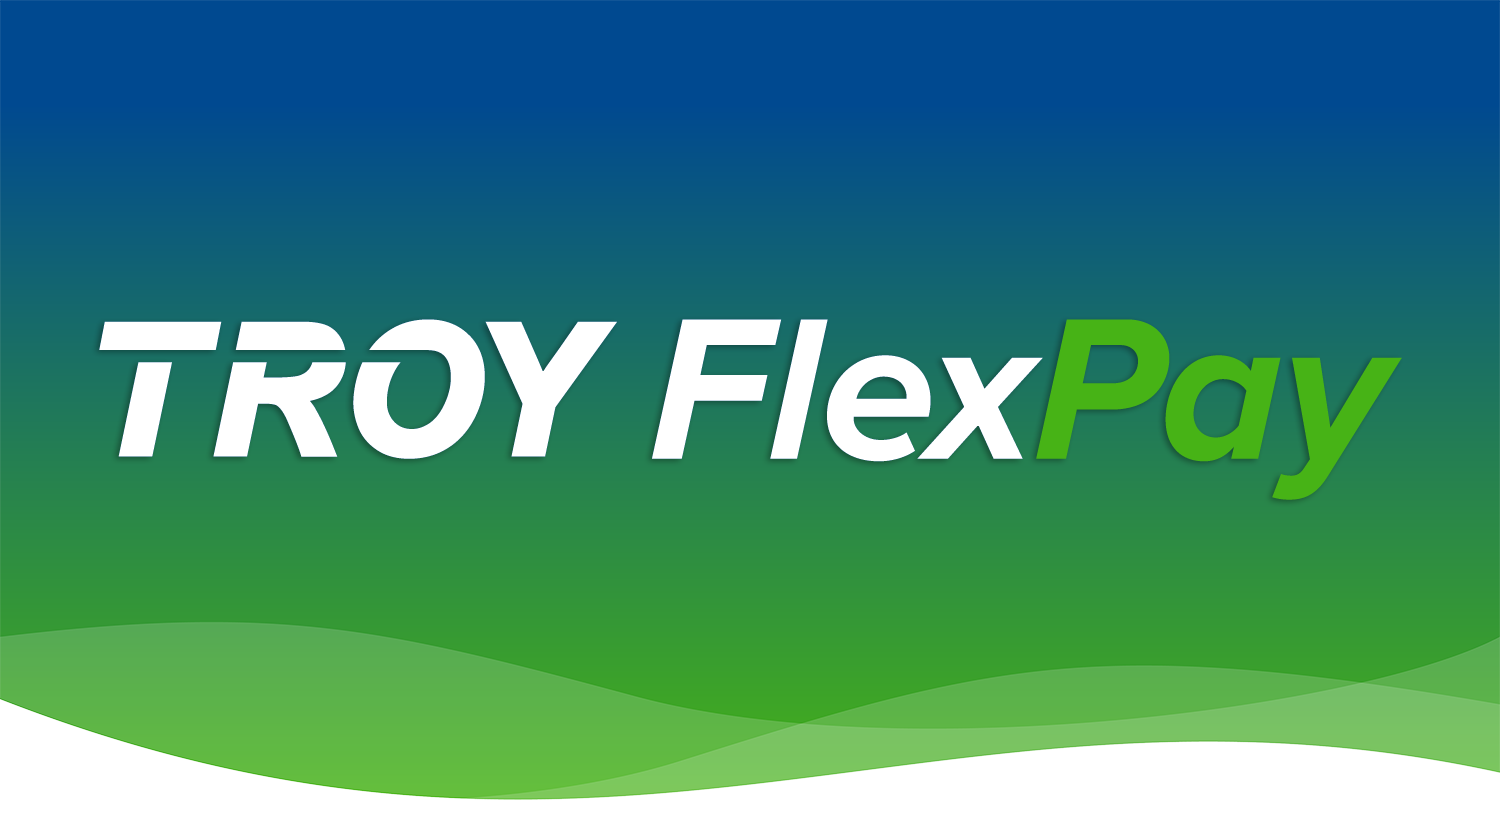 TROY FlexPay Logo